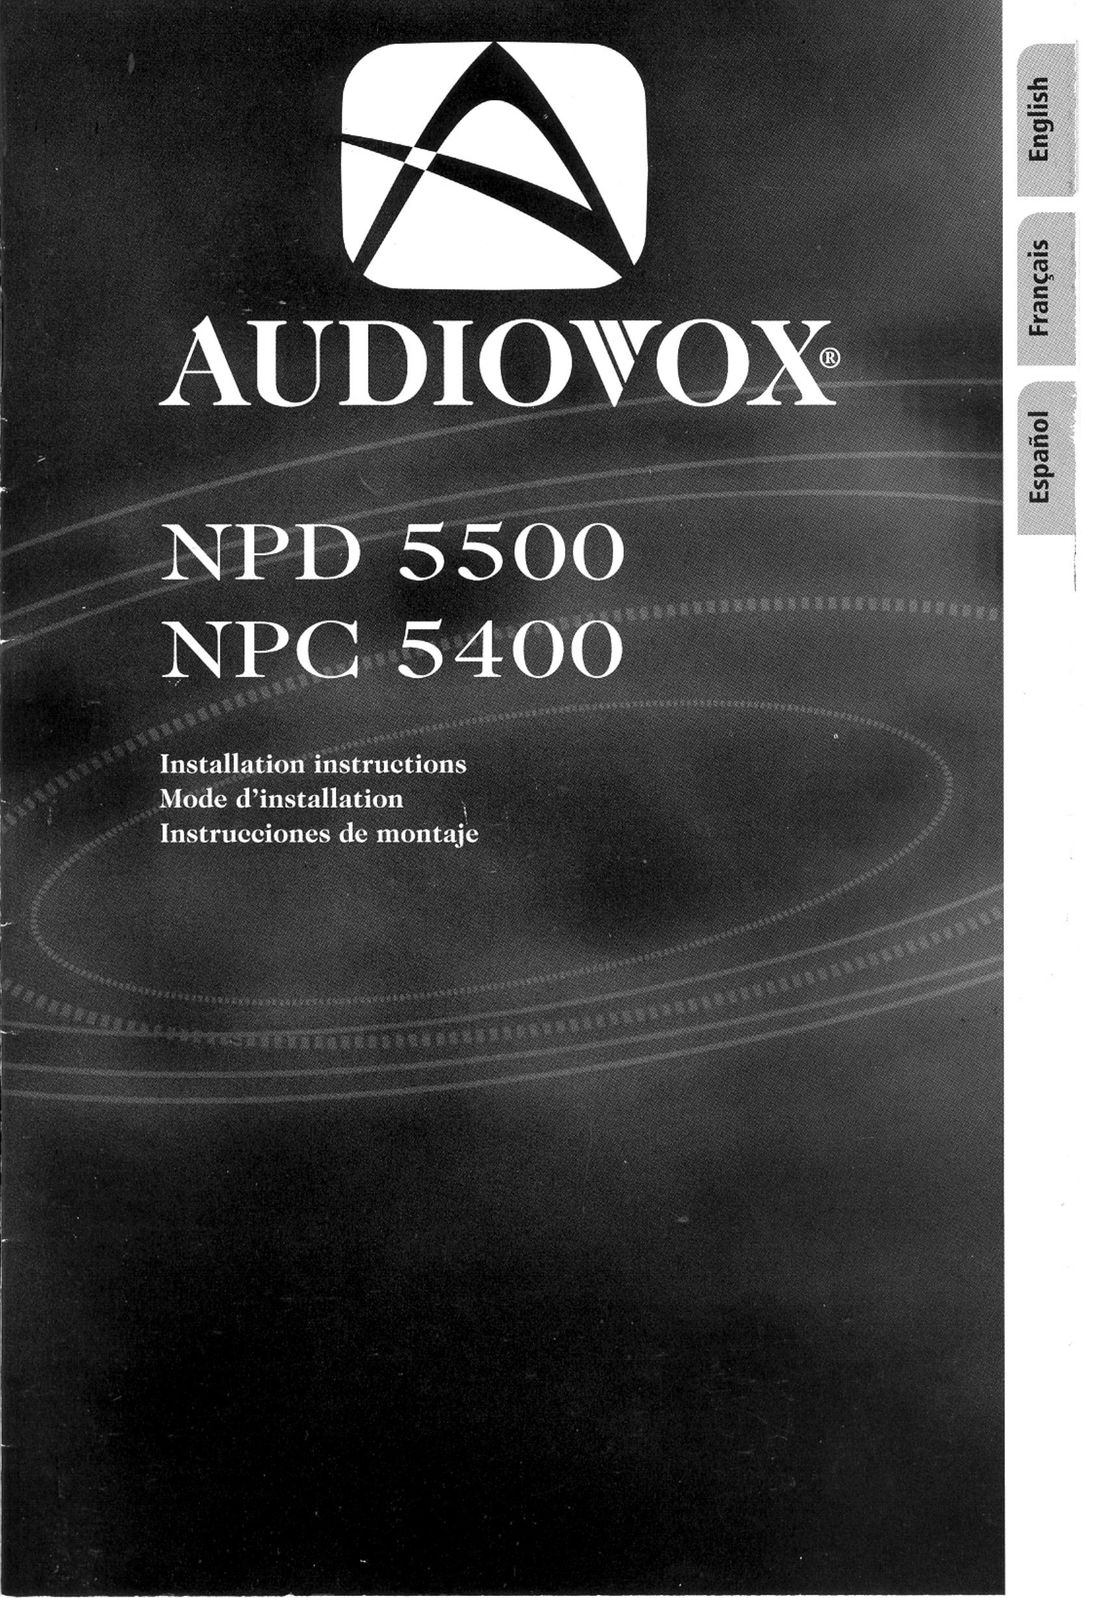 Audiovox NPD 5400 Portable Speaker User Manual